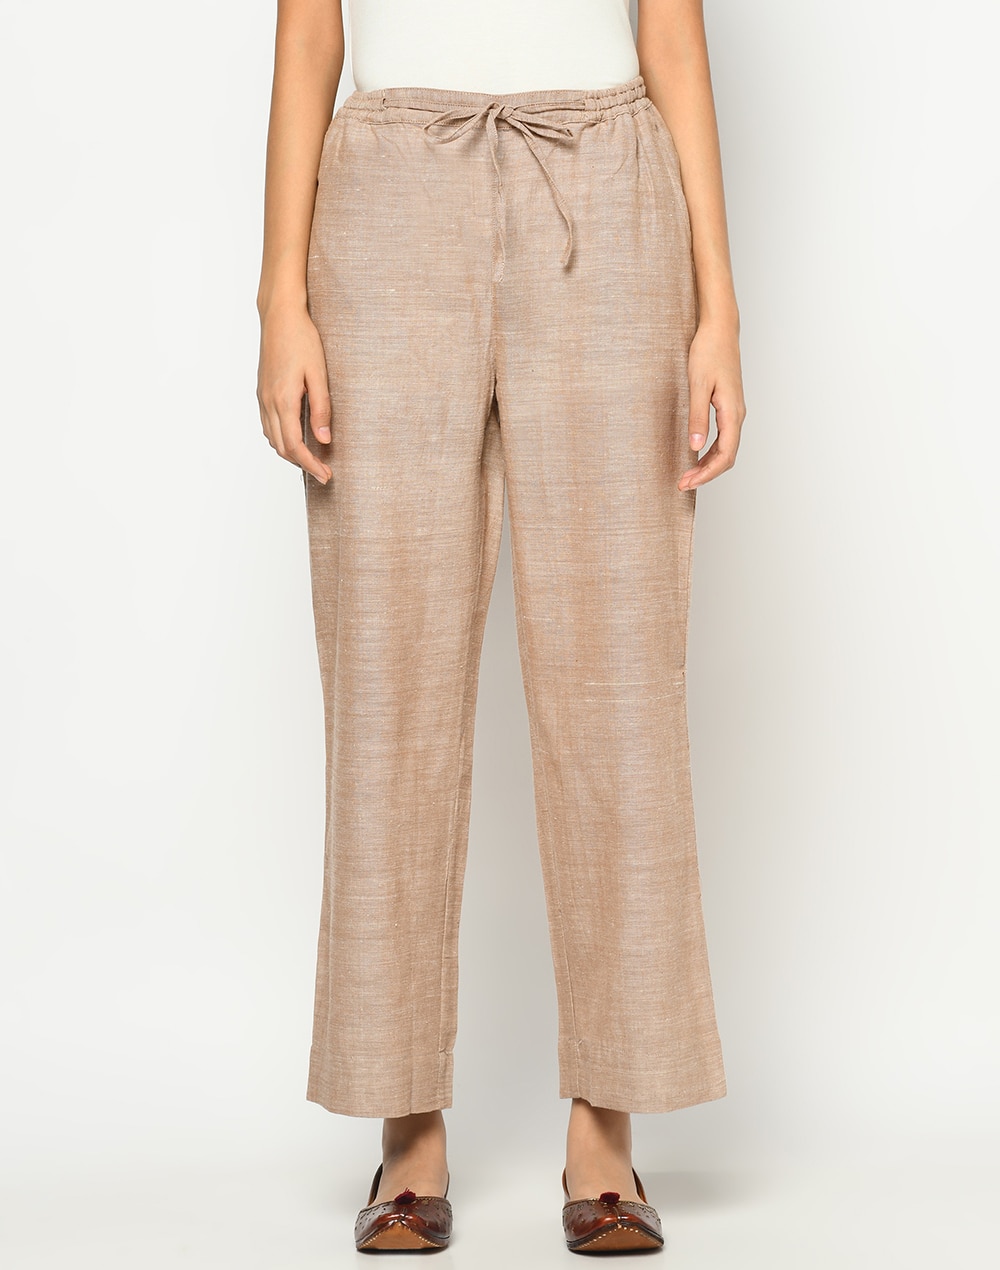 Buy Fabindia Women's Straight Pants (10431202_L_Brown) at Amazon.in